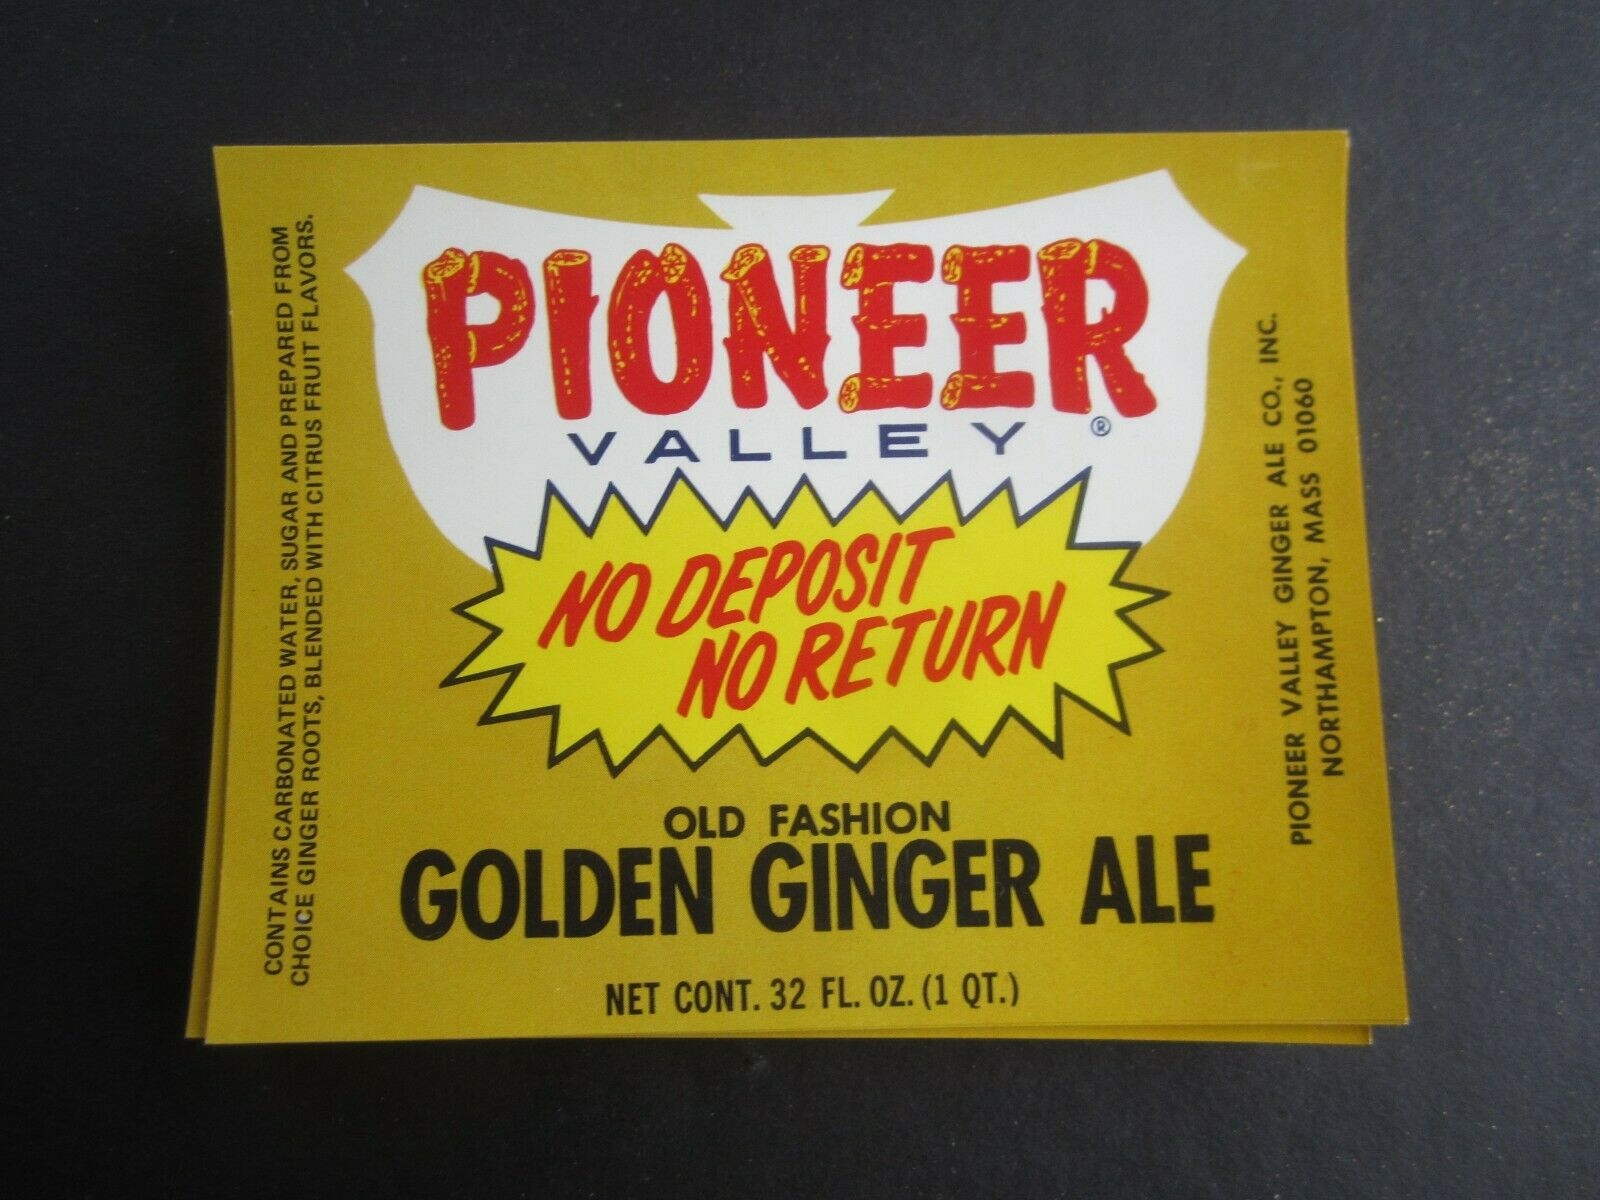  Lot of 100 Old Vintage - PIONEER VALLEY Golden...